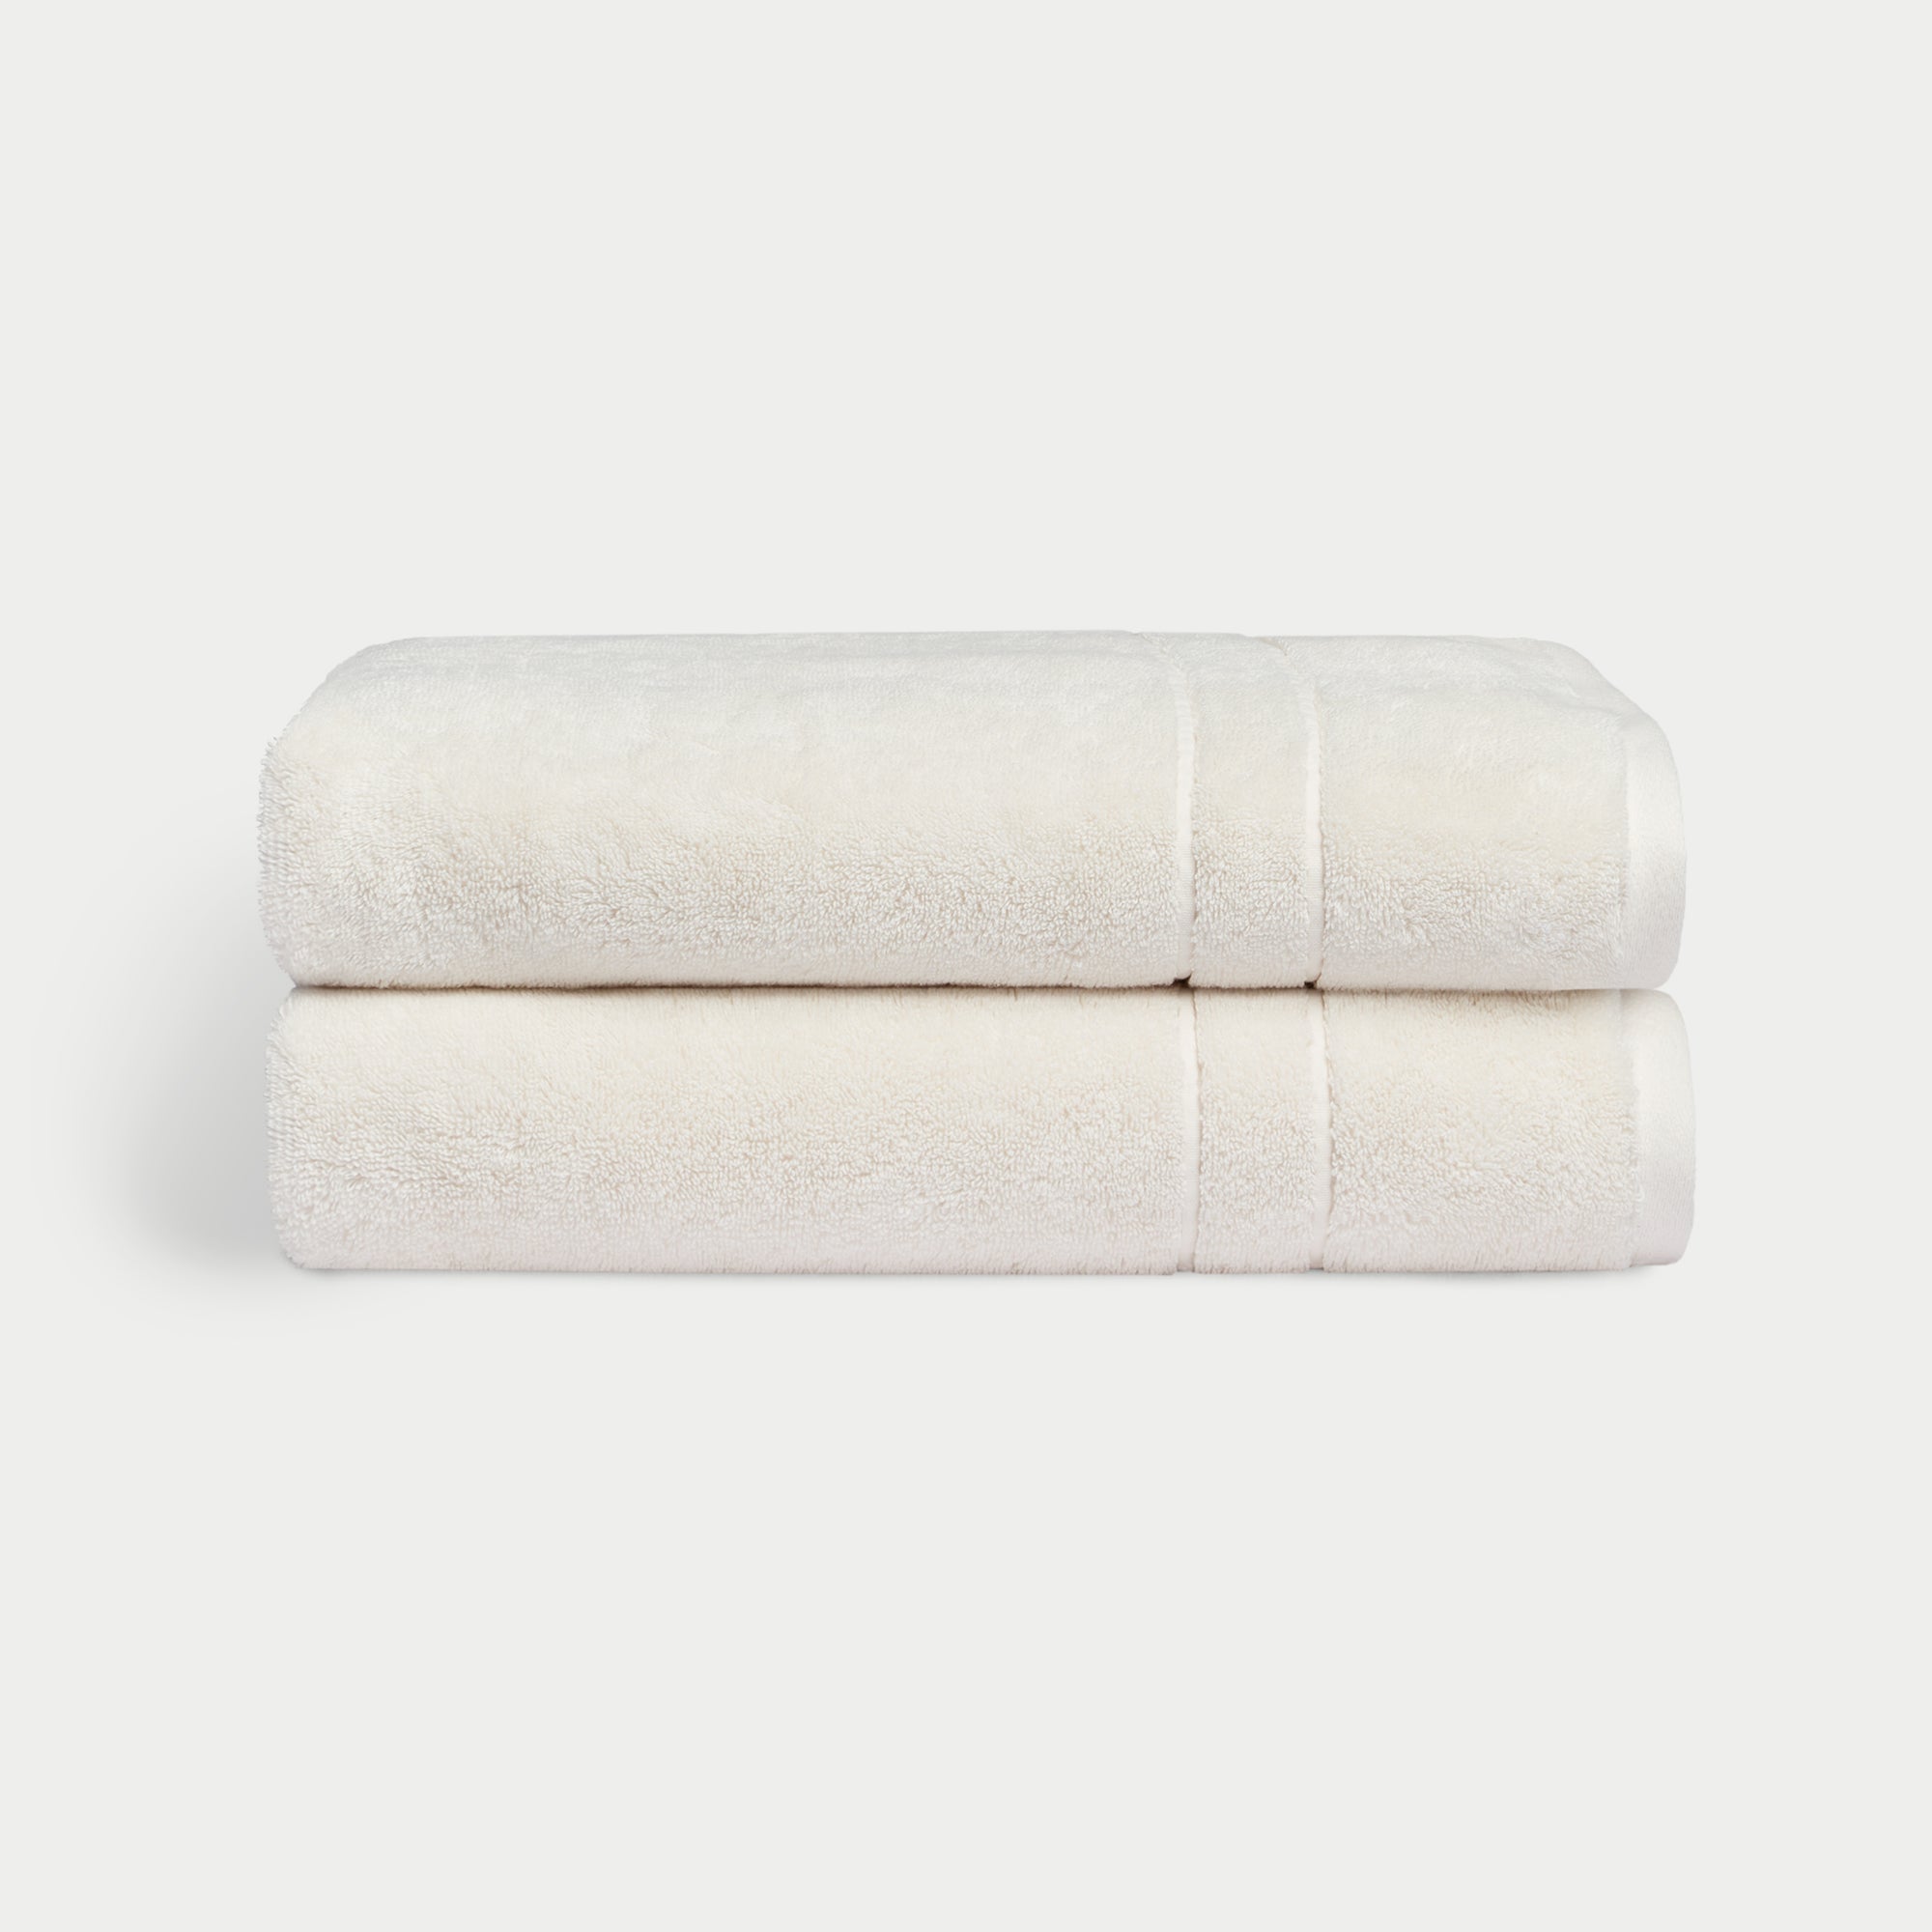 Premium Plush Bath Towels in the color Seashell. Photo of Complete Premium Plush Bath Bundle taken with white background |Color:Seashell